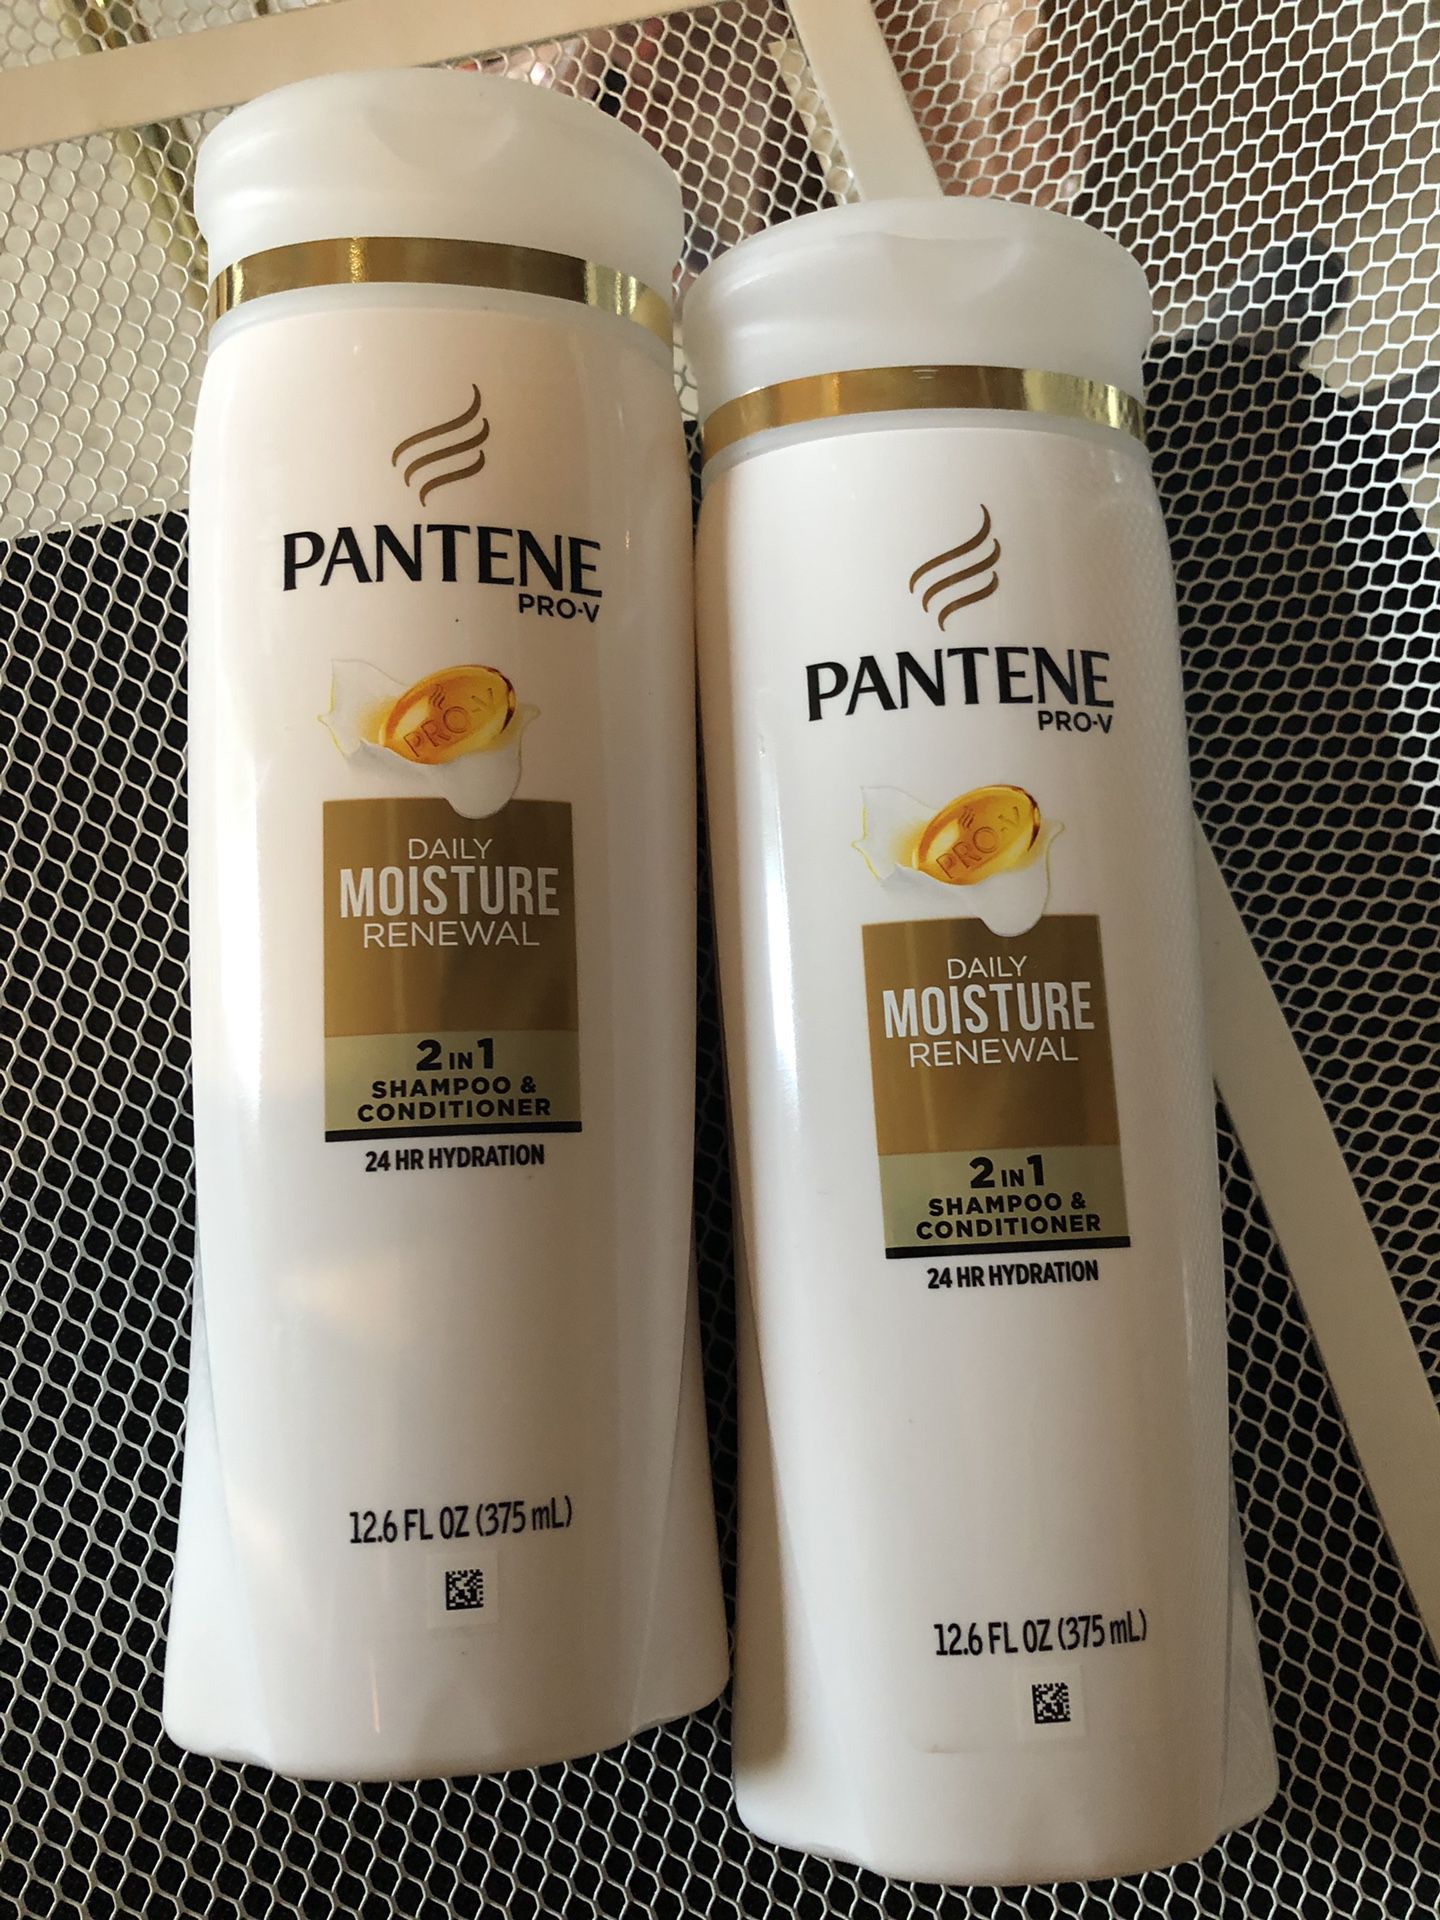 2 Pantene 2in1 shampoos